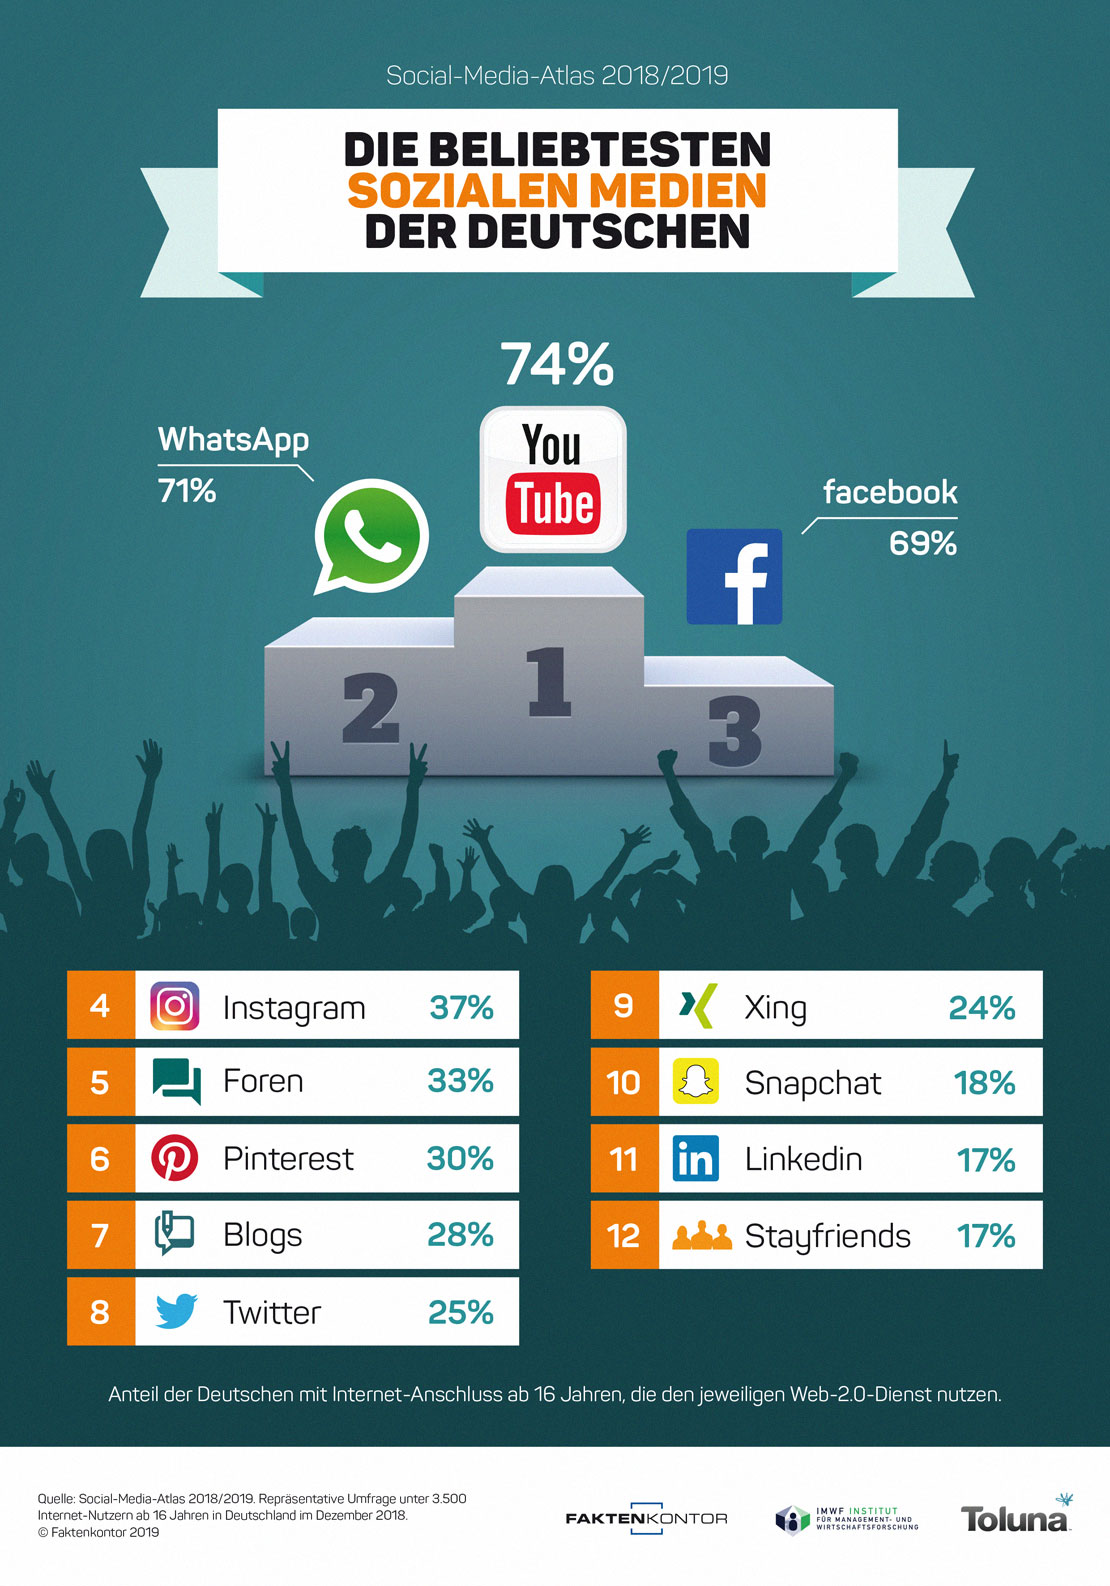 Beliebteste Soziale Medien in Deutschland 2019